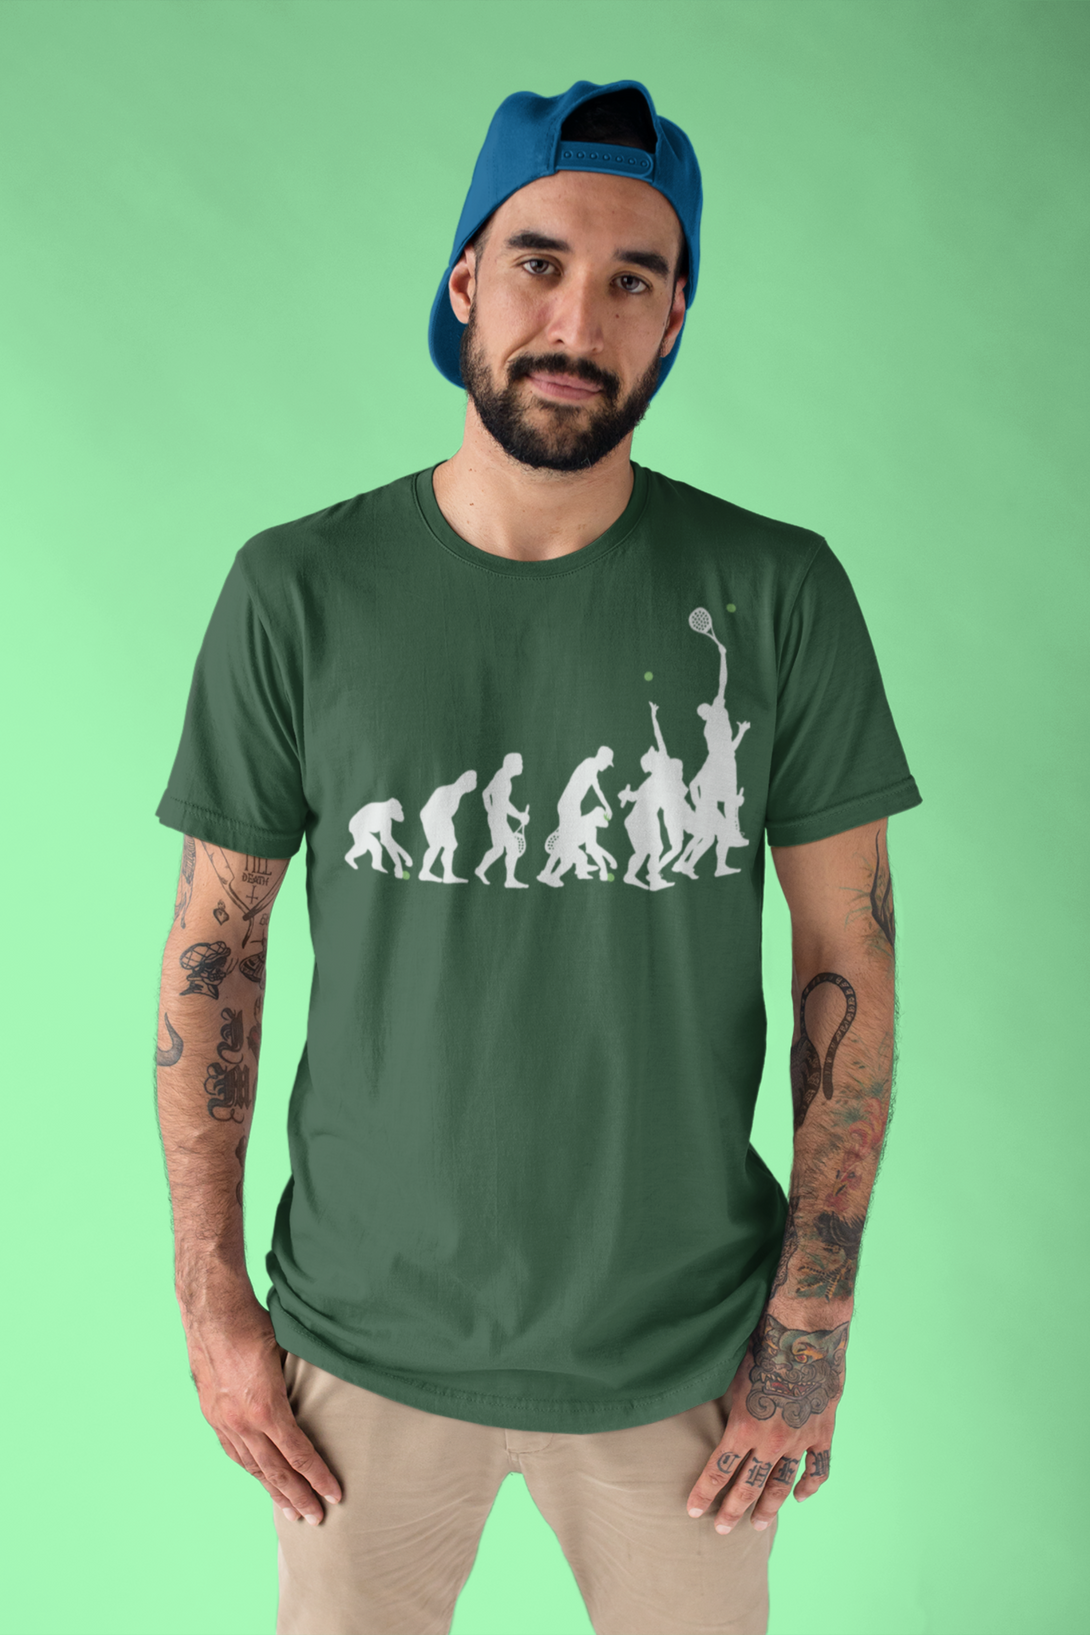 Tennis Evolution Printed T-Shirt For Men - WowWaves - 4